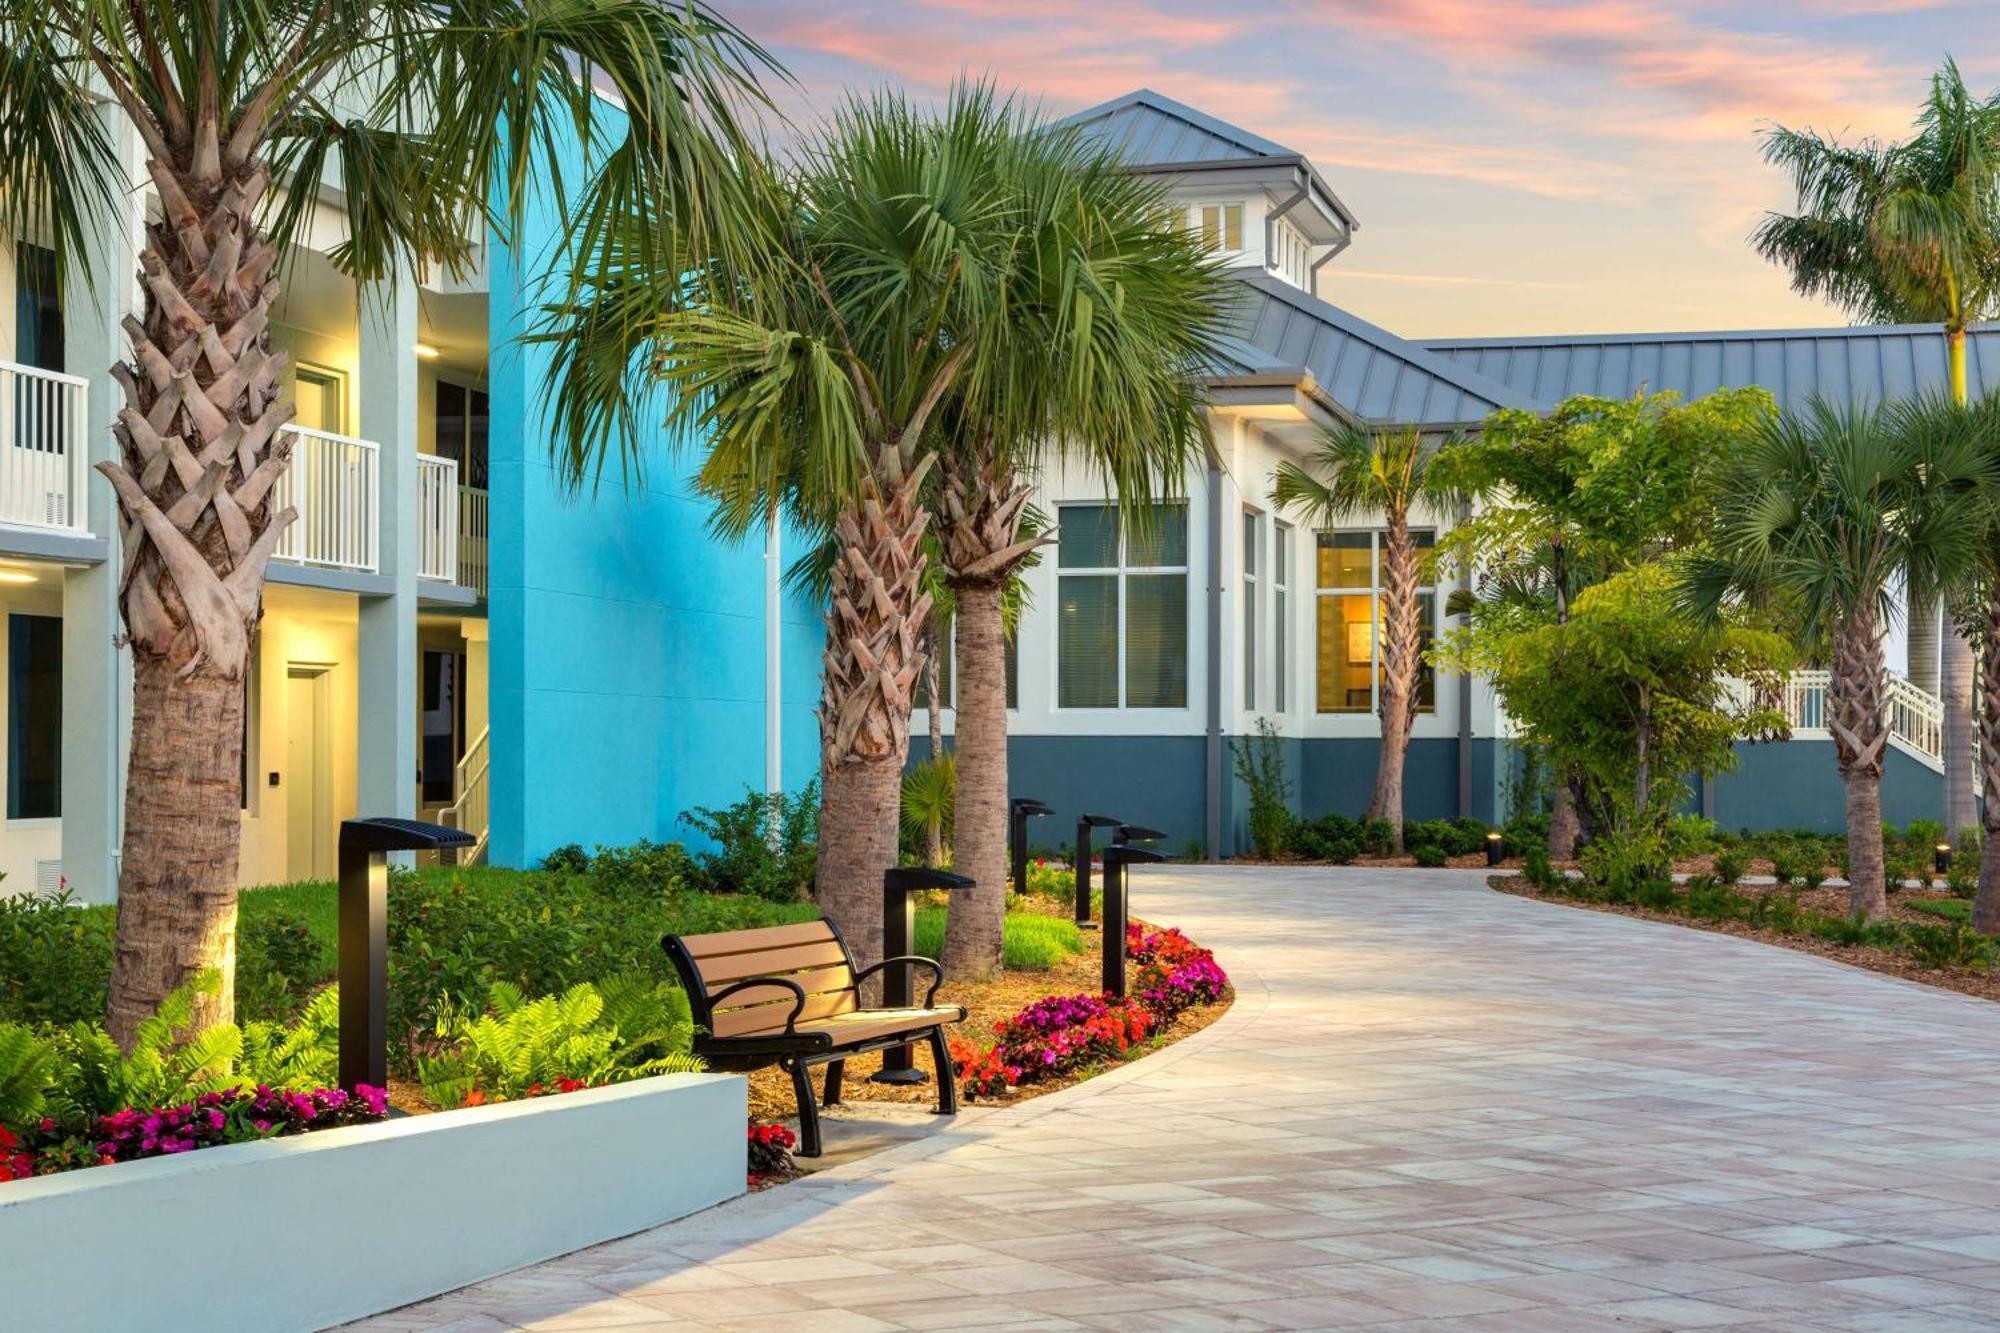 Hilton Garden Inn Key West / The Keys Collection Bagian luar foto